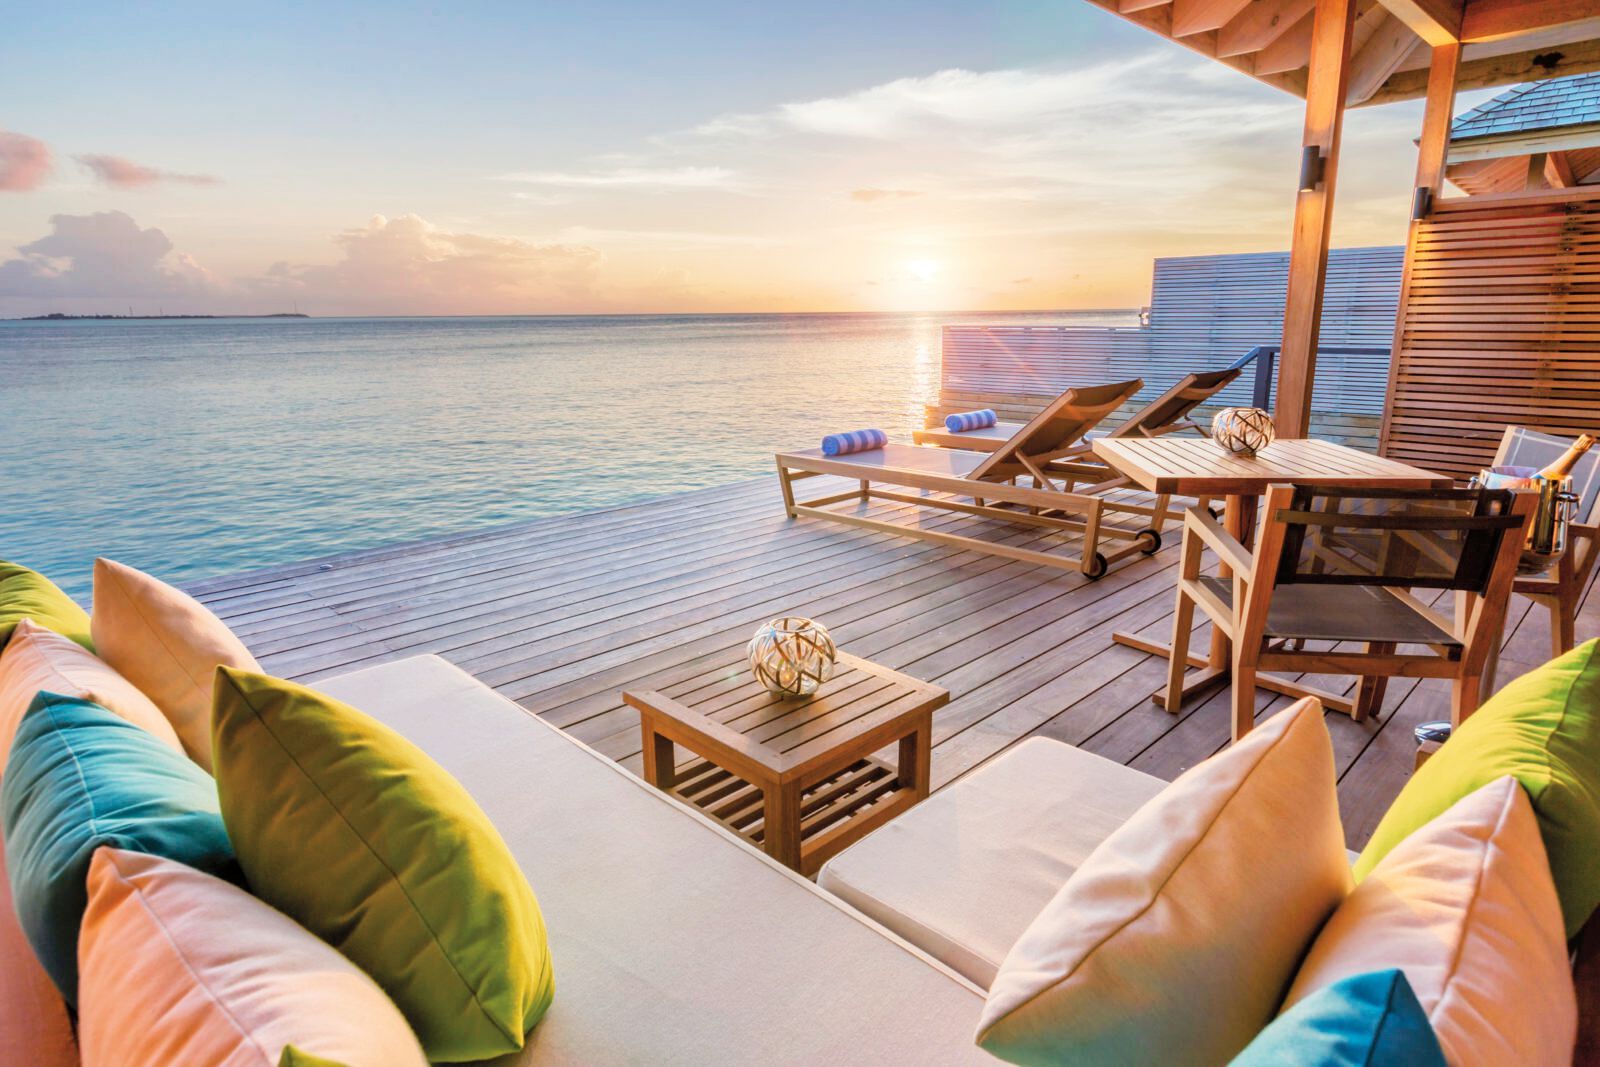 Maldives - Hotel Hurawalhi Island Resort 5*